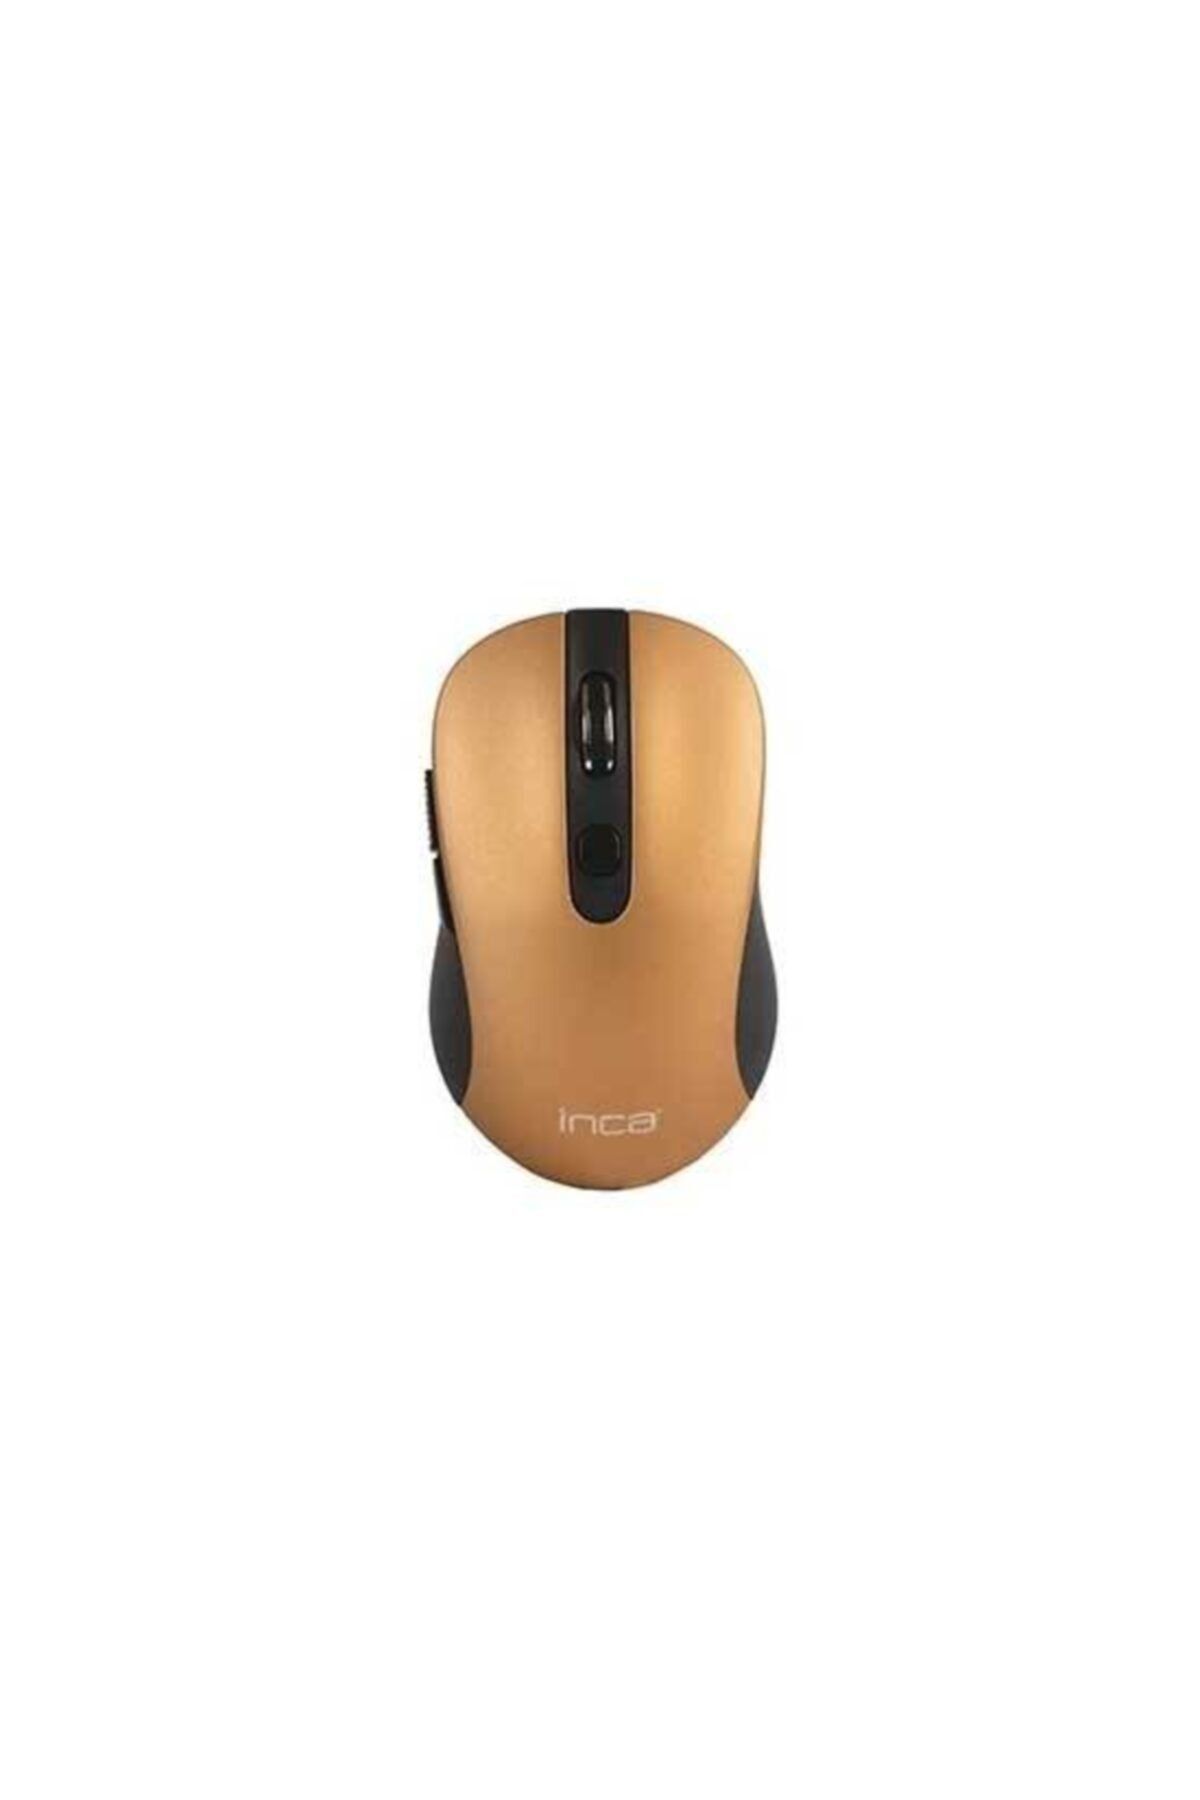 Inca Iwm-233rg 1600dpı Silent Wireless Mouse Sessiz